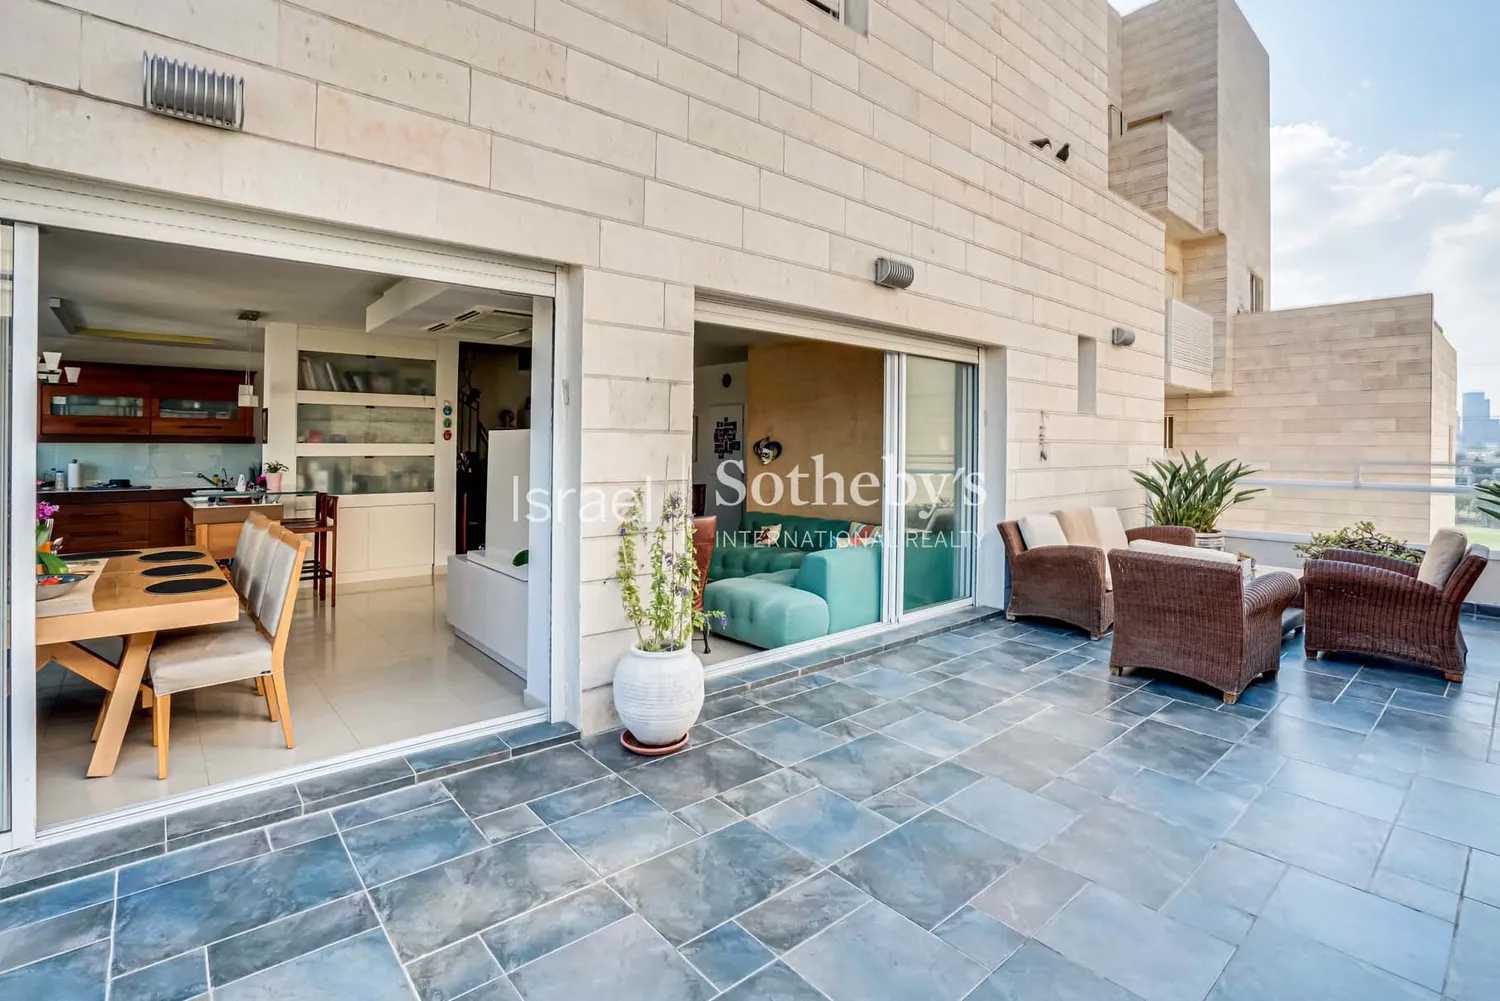 Dom w Tel Awiw-Jafo, Me'ir Ya'ari Street 10004253